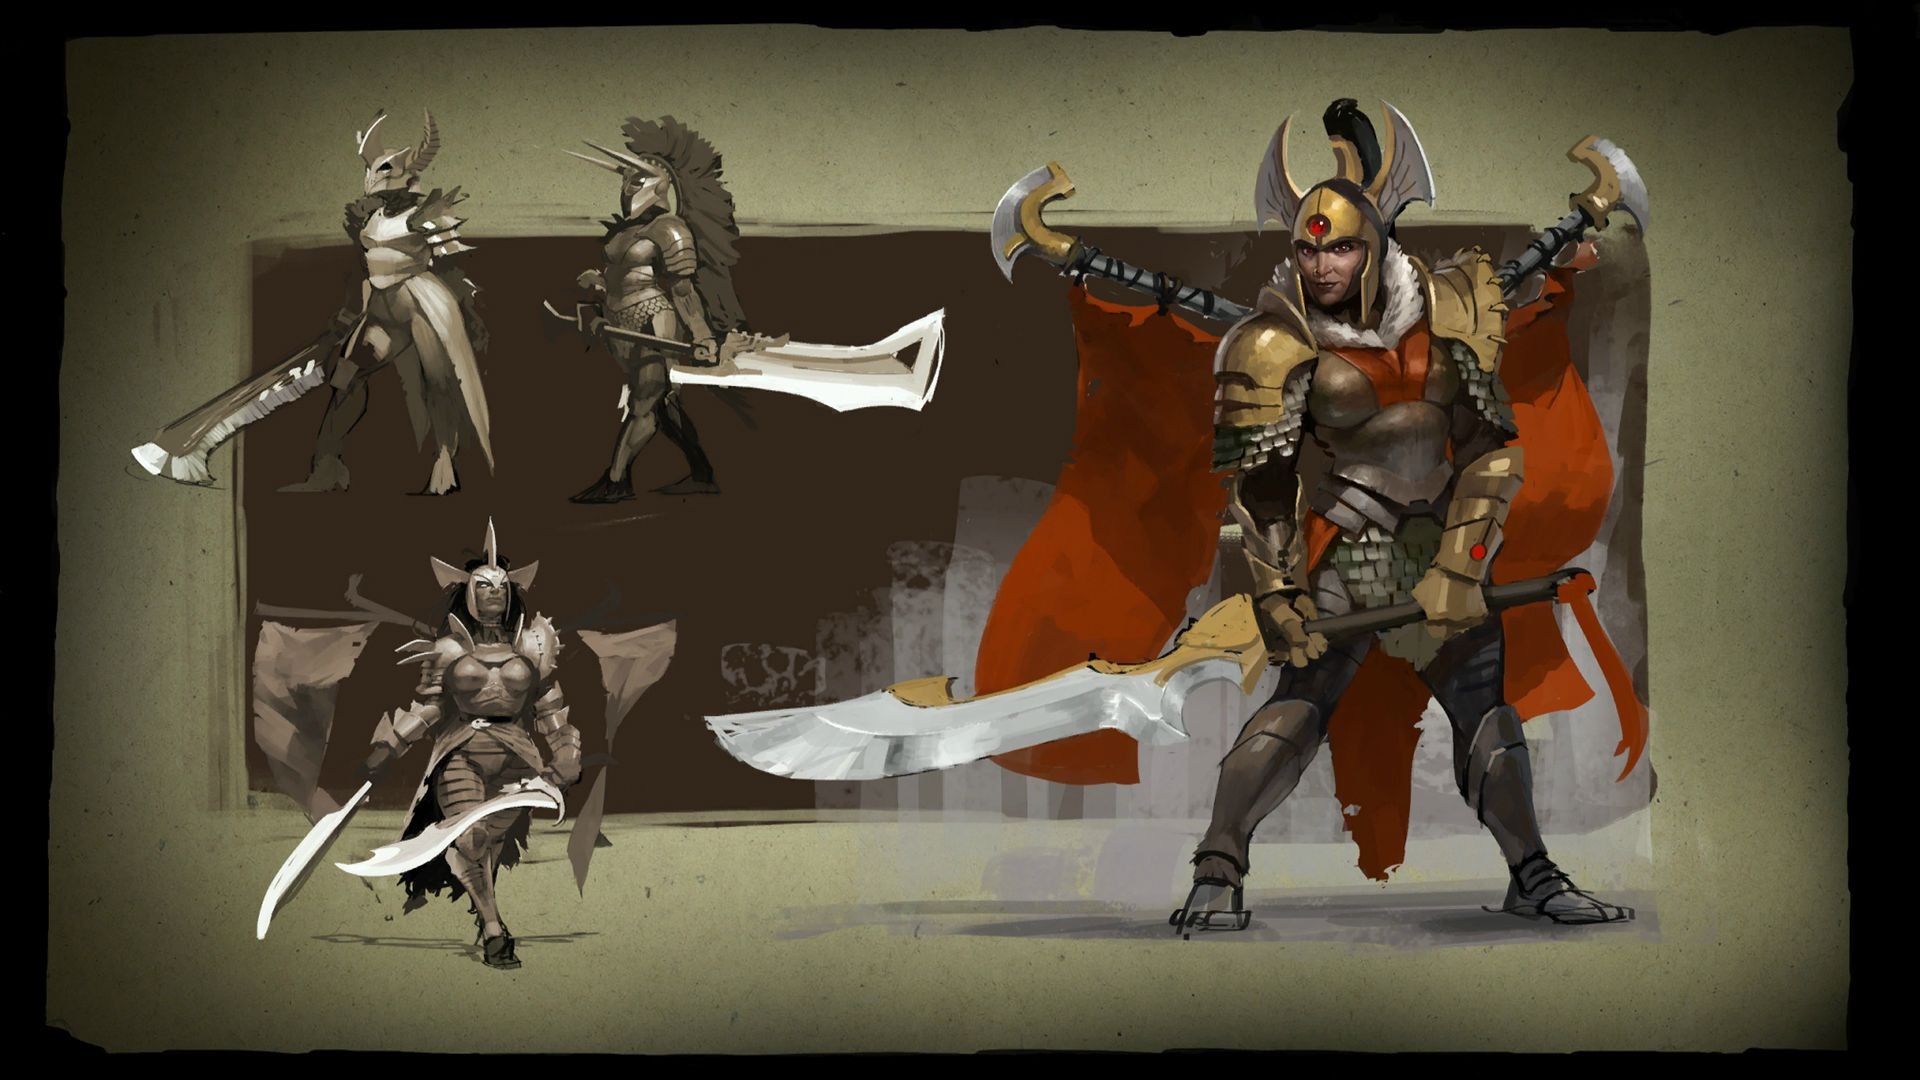 General 1920x1080 Dota Dota 2 Valve Corporation video games Online games Legion Commander sword knight hero fantasy art video game art PC gaming